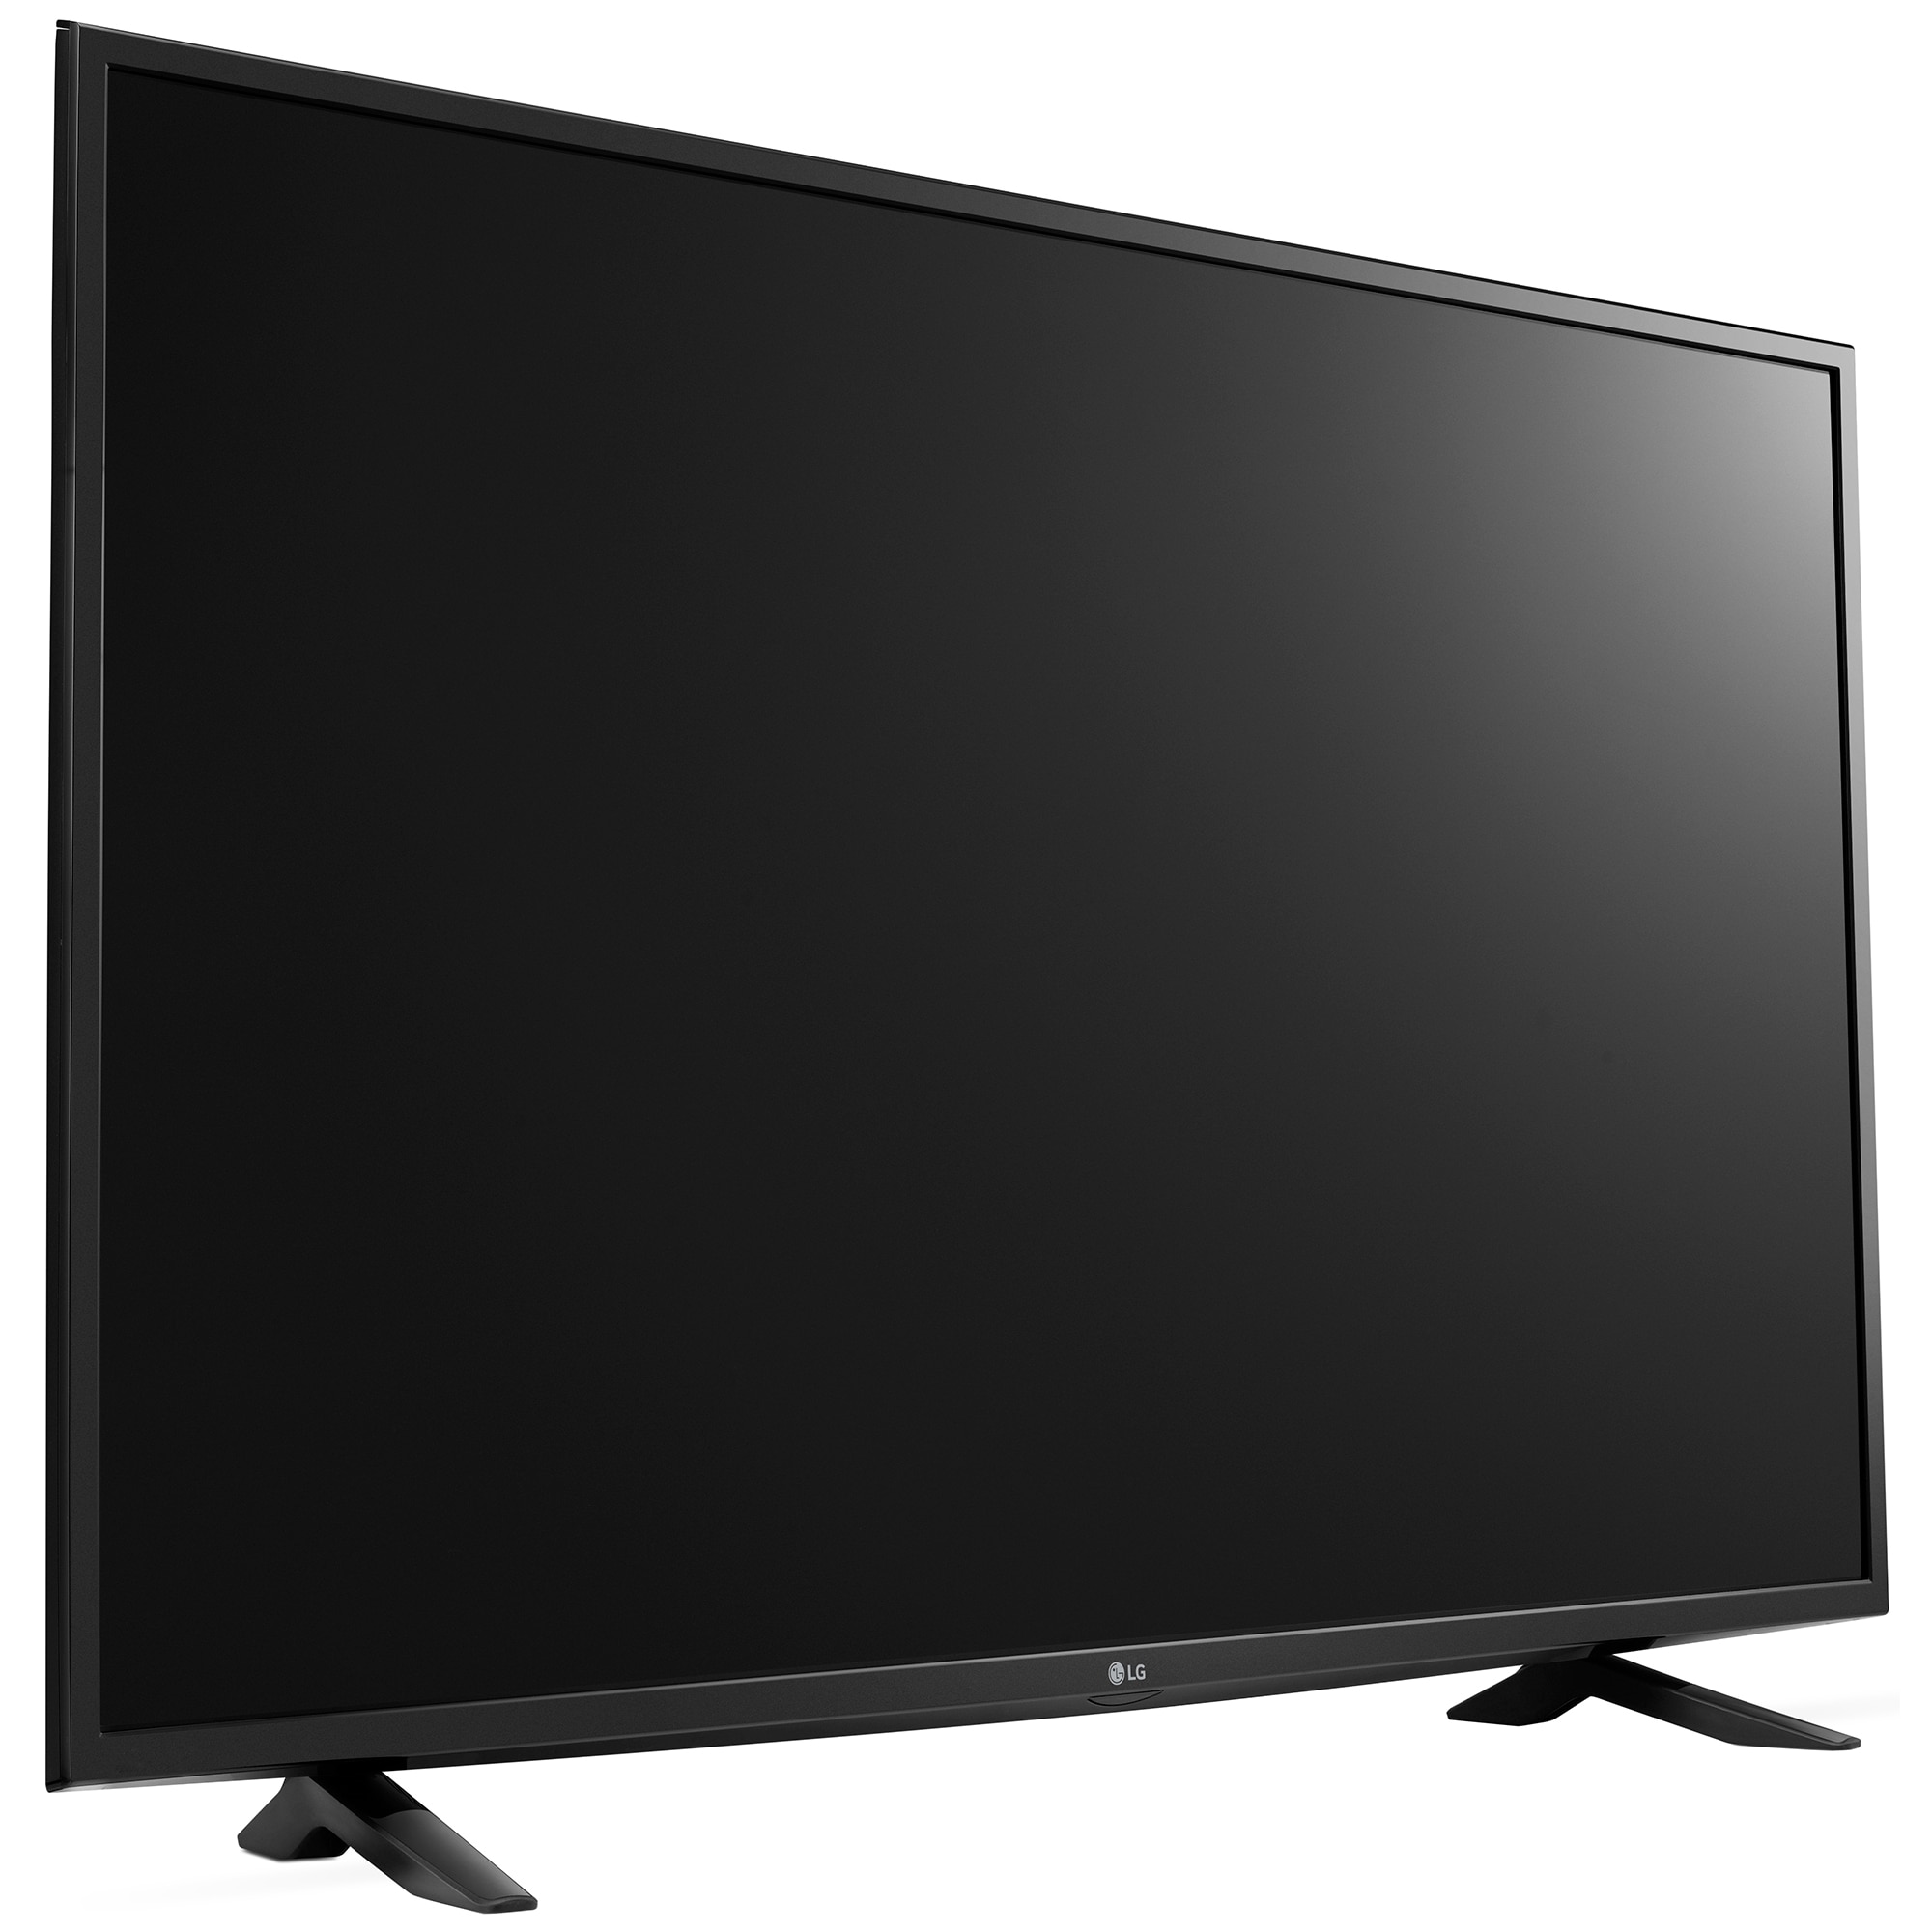 Coherent Someday Petrify Televizor LED LG, Game TV, 108 cm, 43LF510V, Full HD, Clasa A++ - eMAG.ro